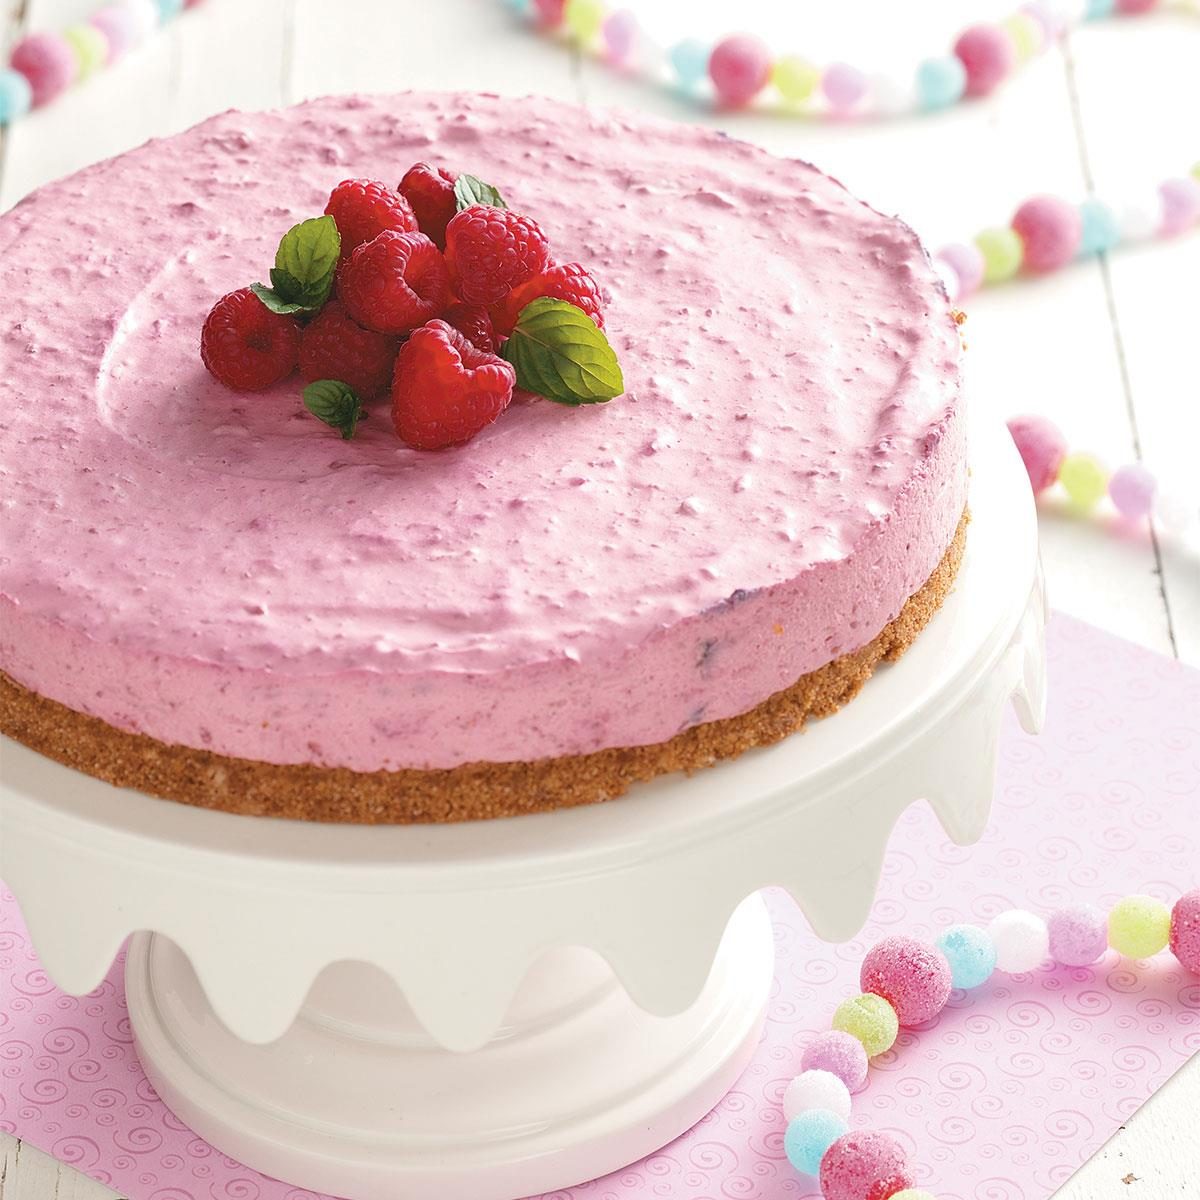 Raspberry dessert recipes